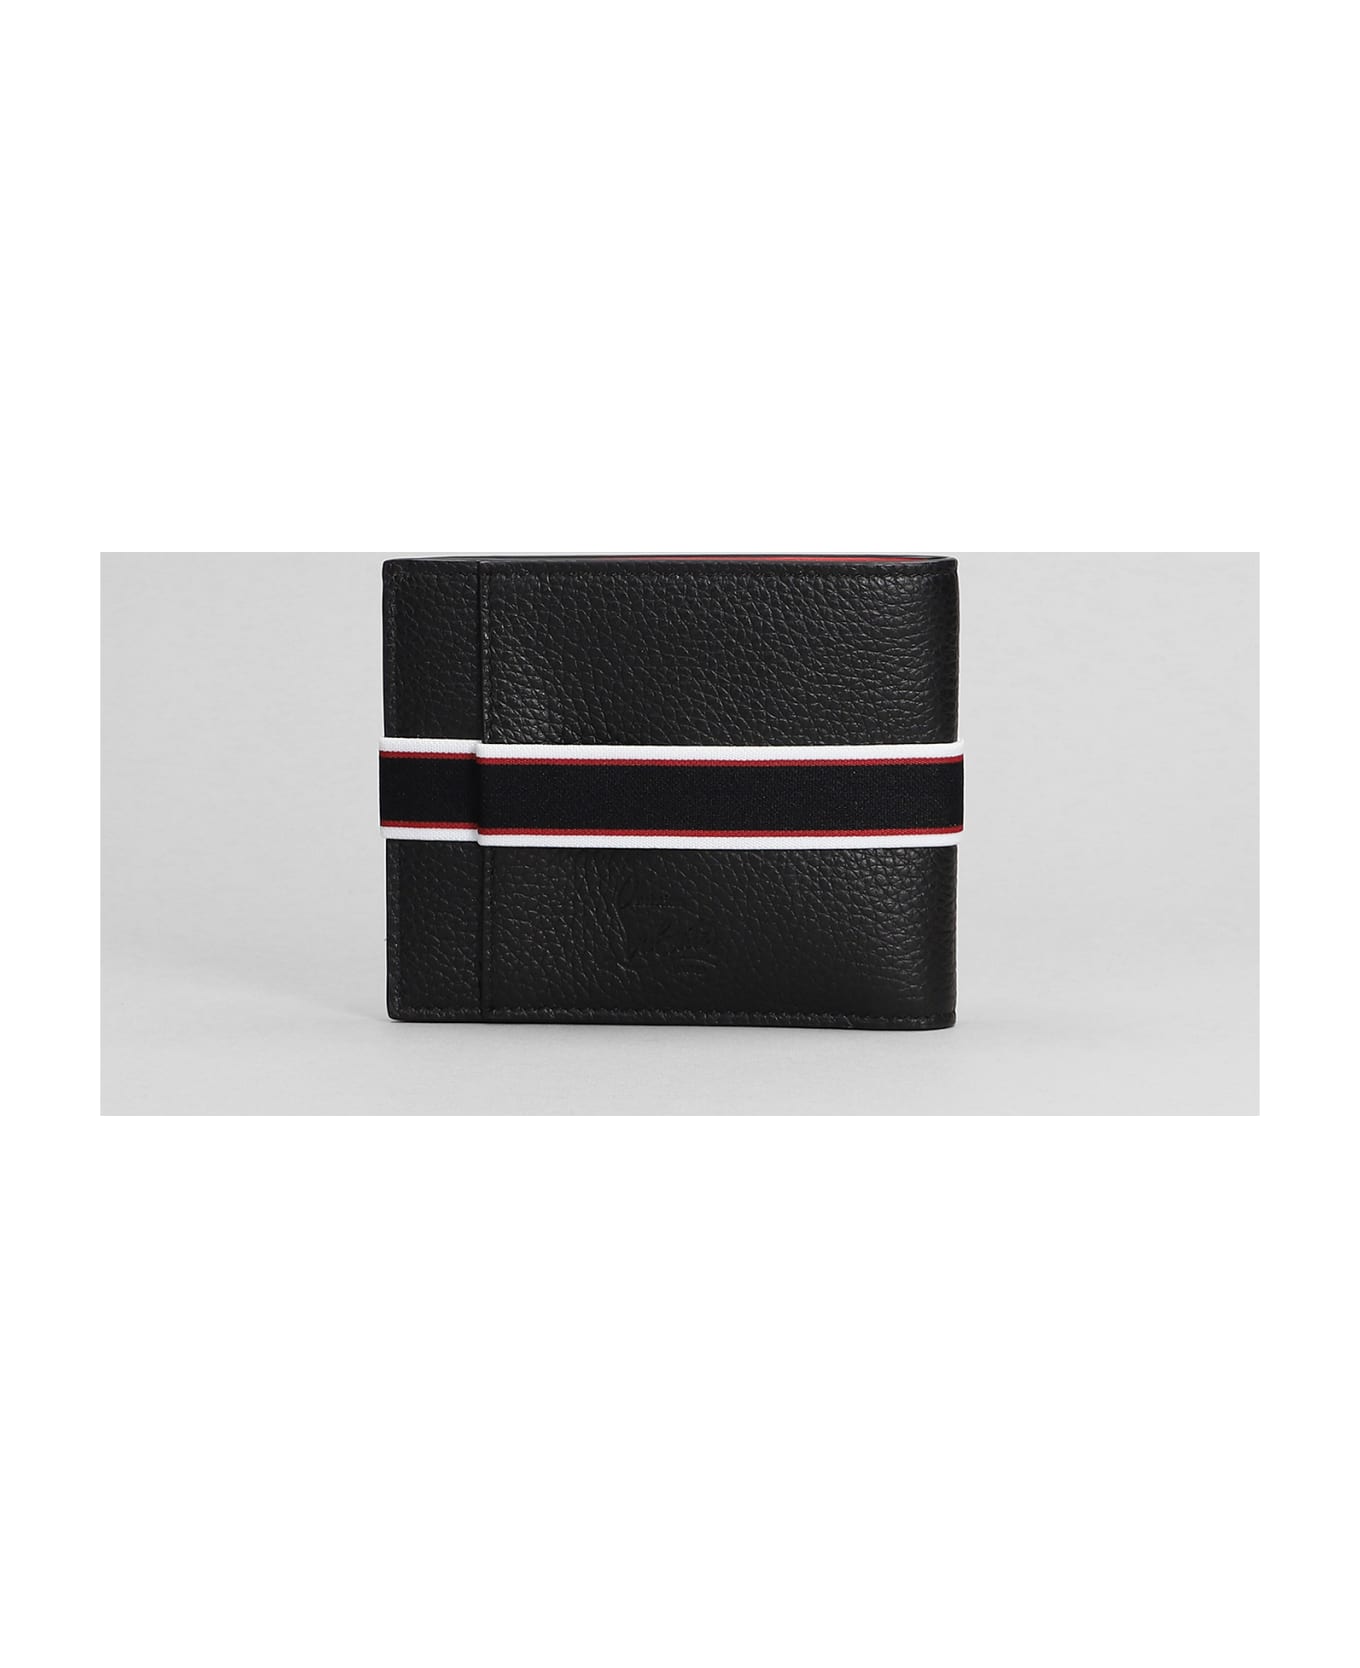 Christian Louboutin Fav Wallet In Black Leather - Black/multi/gun Metal 財布